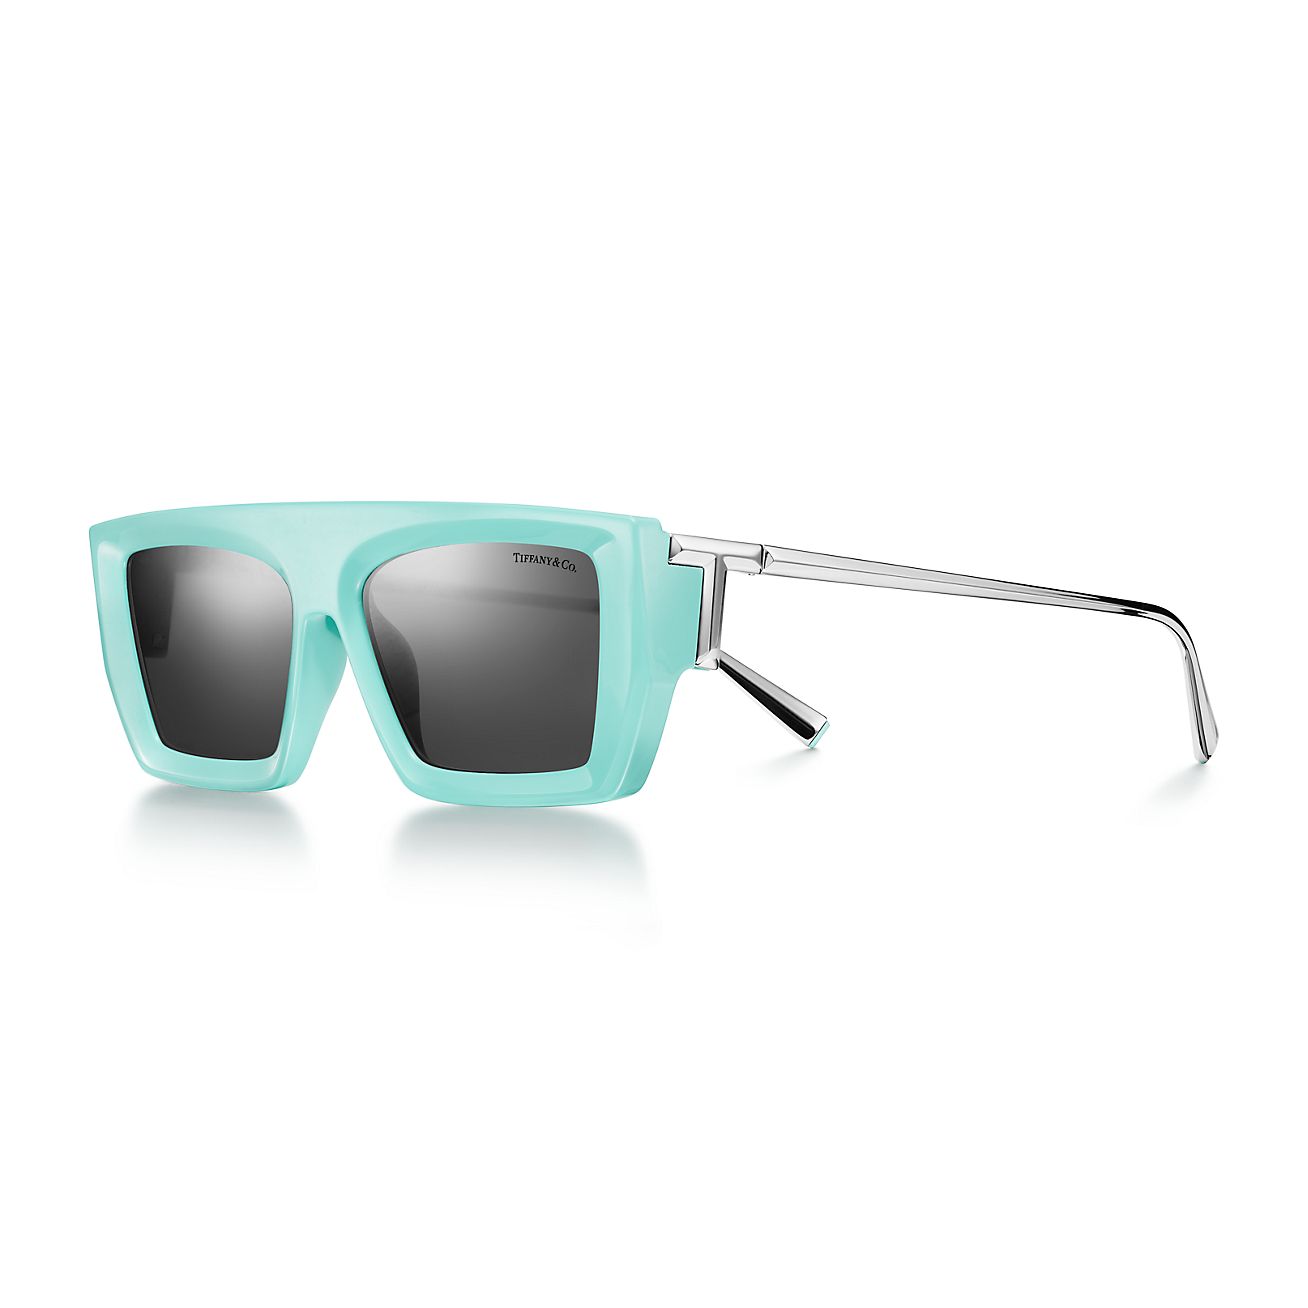 Tiffany T Sunglasses in Tiffany Blue® Acetate with Dark Gray Lenses